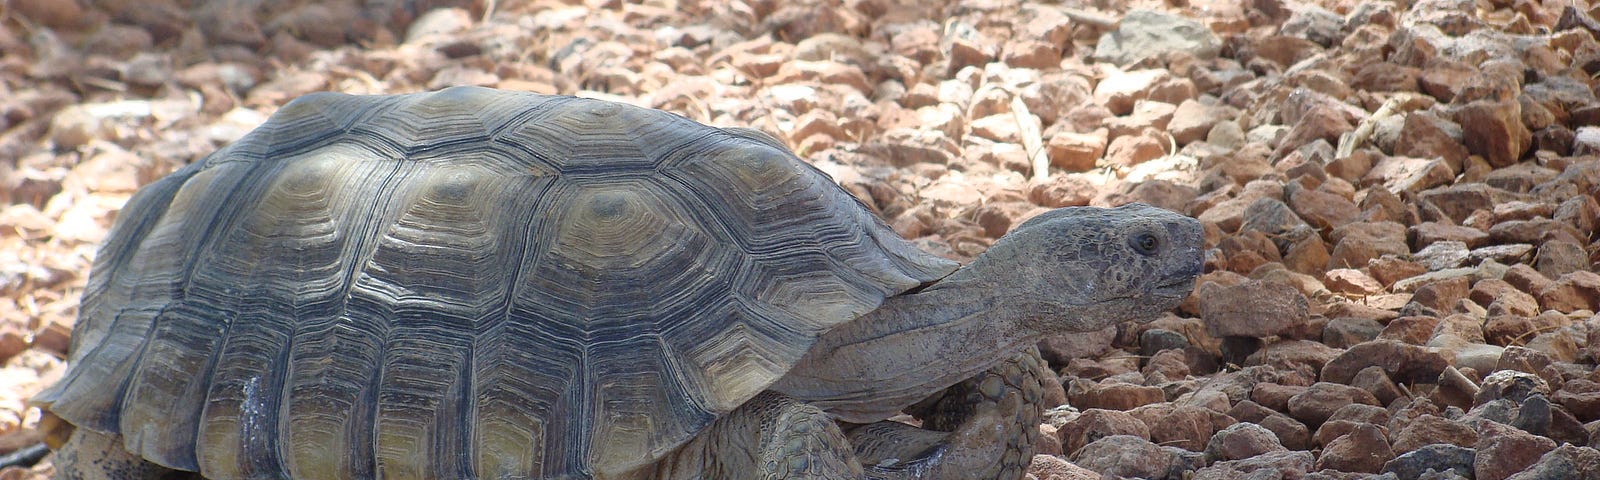 Mojave Desert Tortoise, Mojave Max, on stones